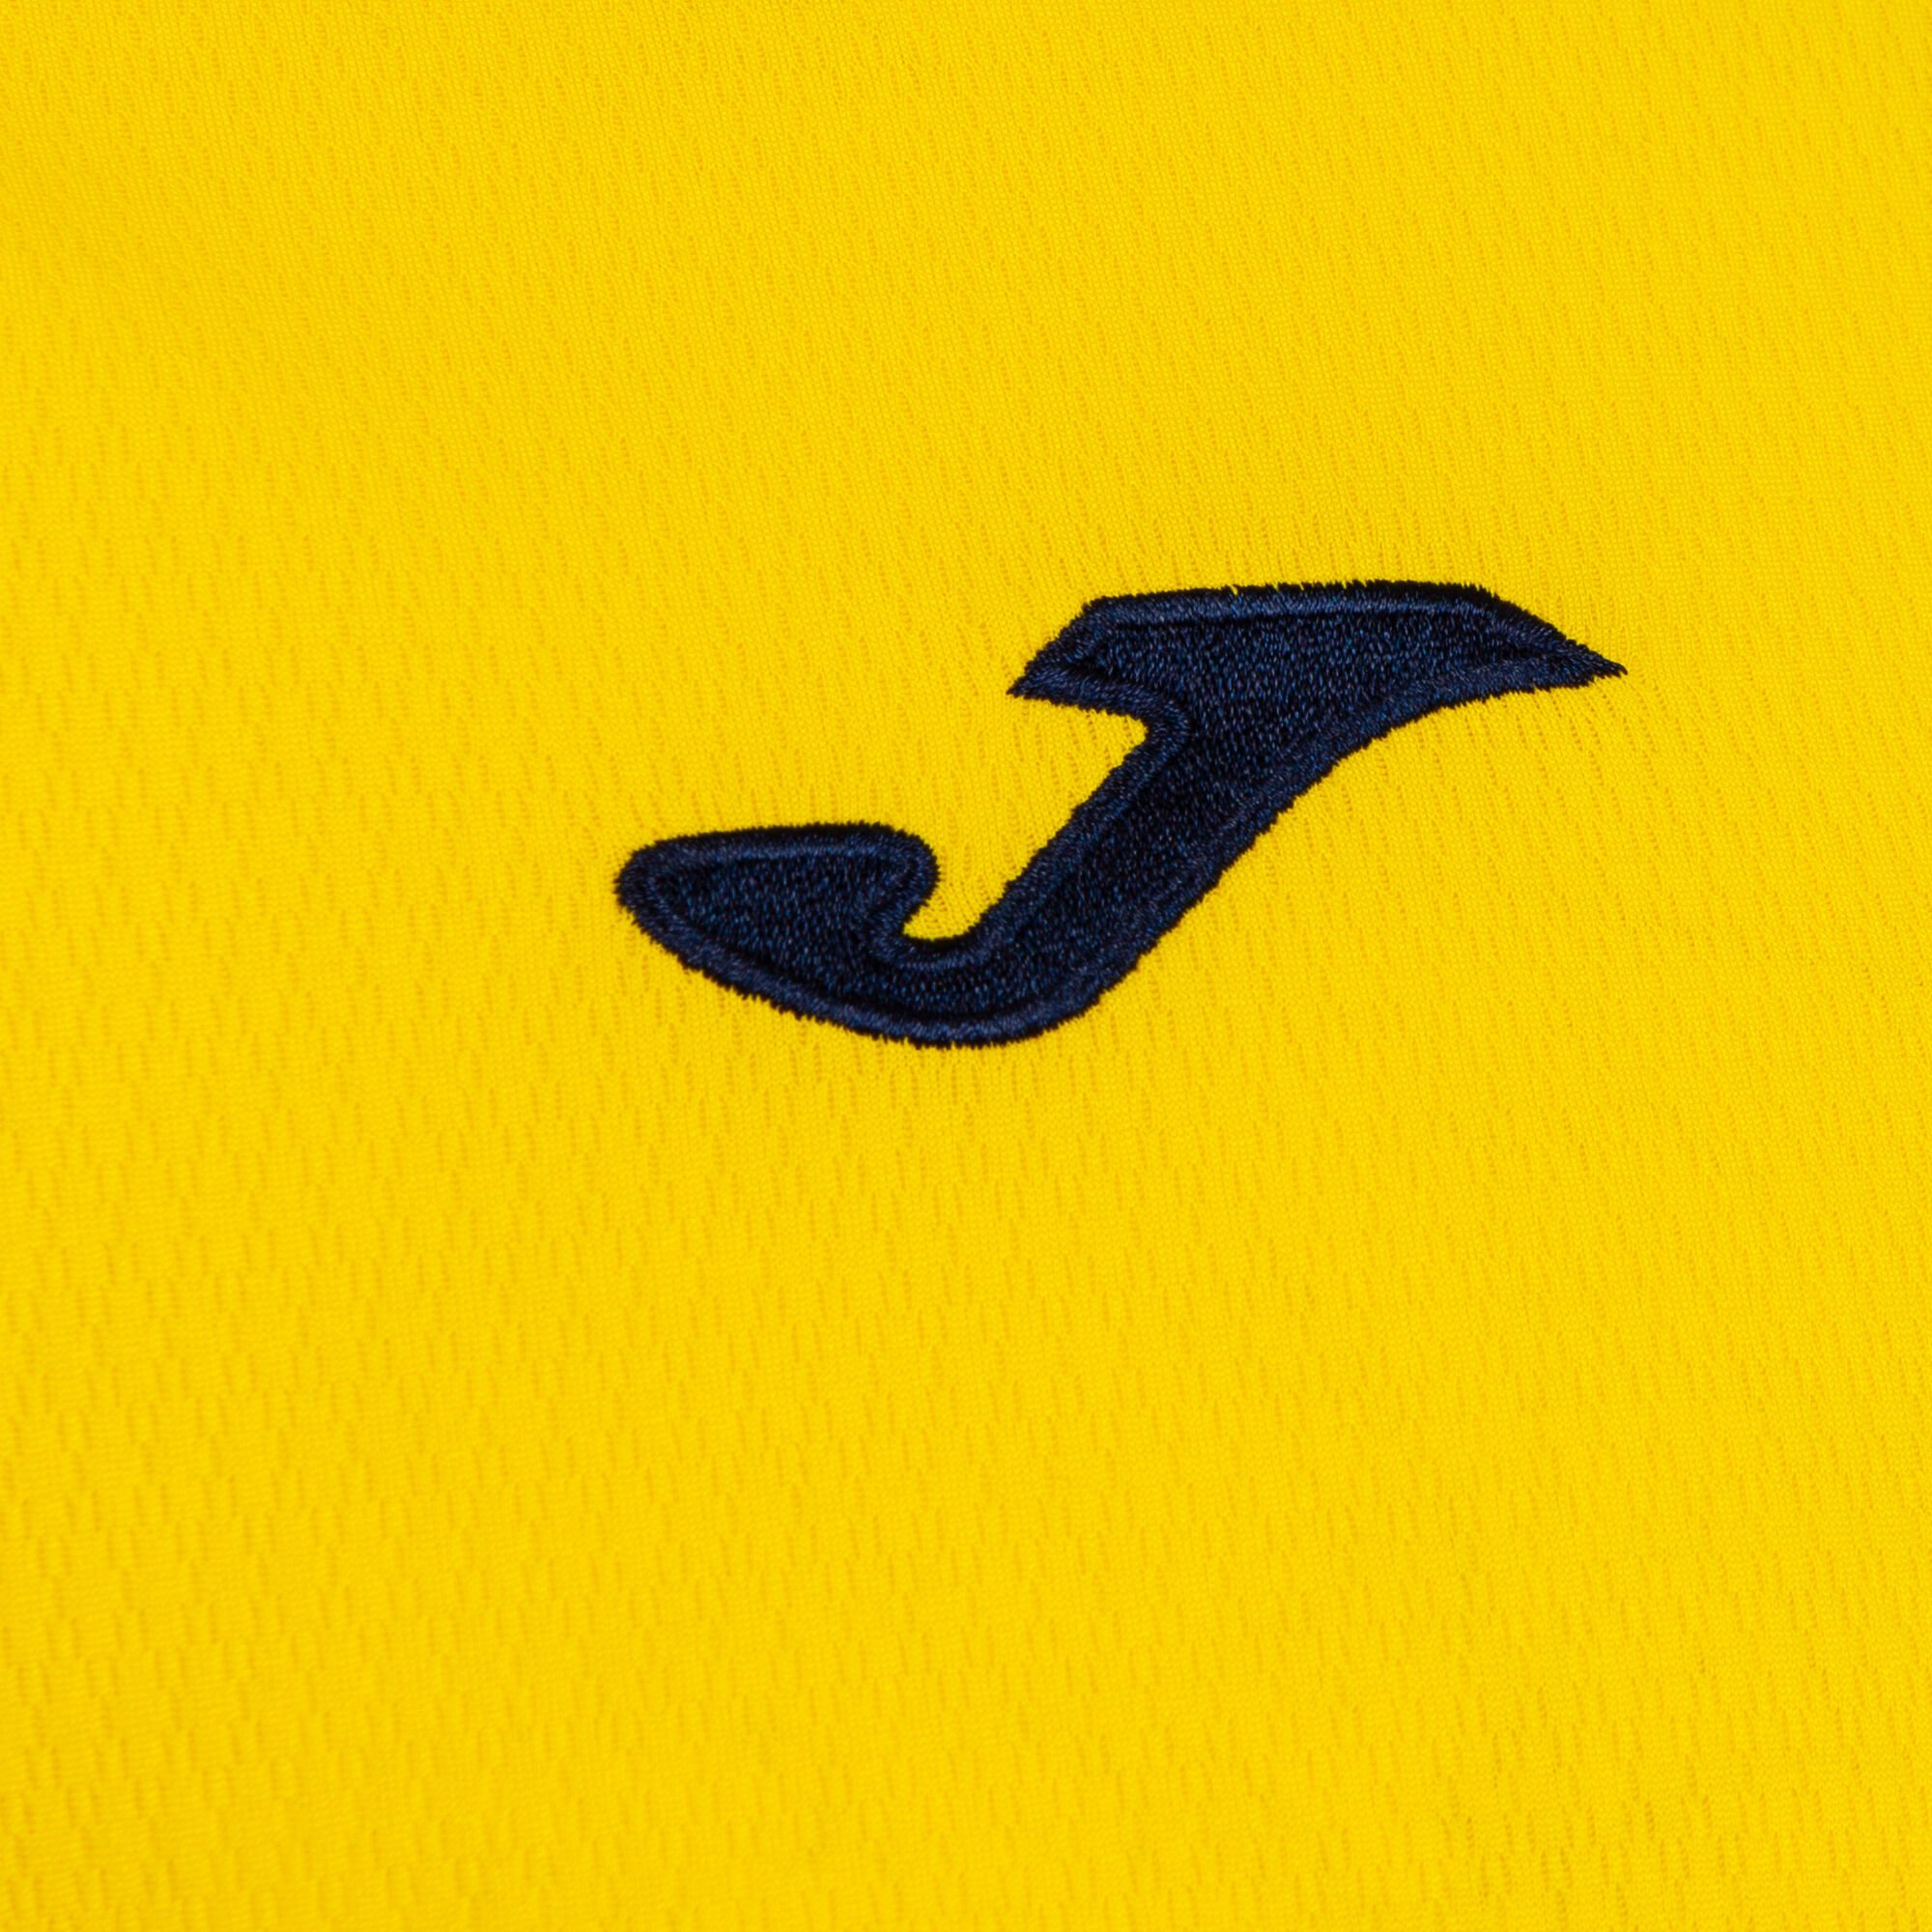 T-shirt manga curta homem Eco Championship amarelo azul marinho